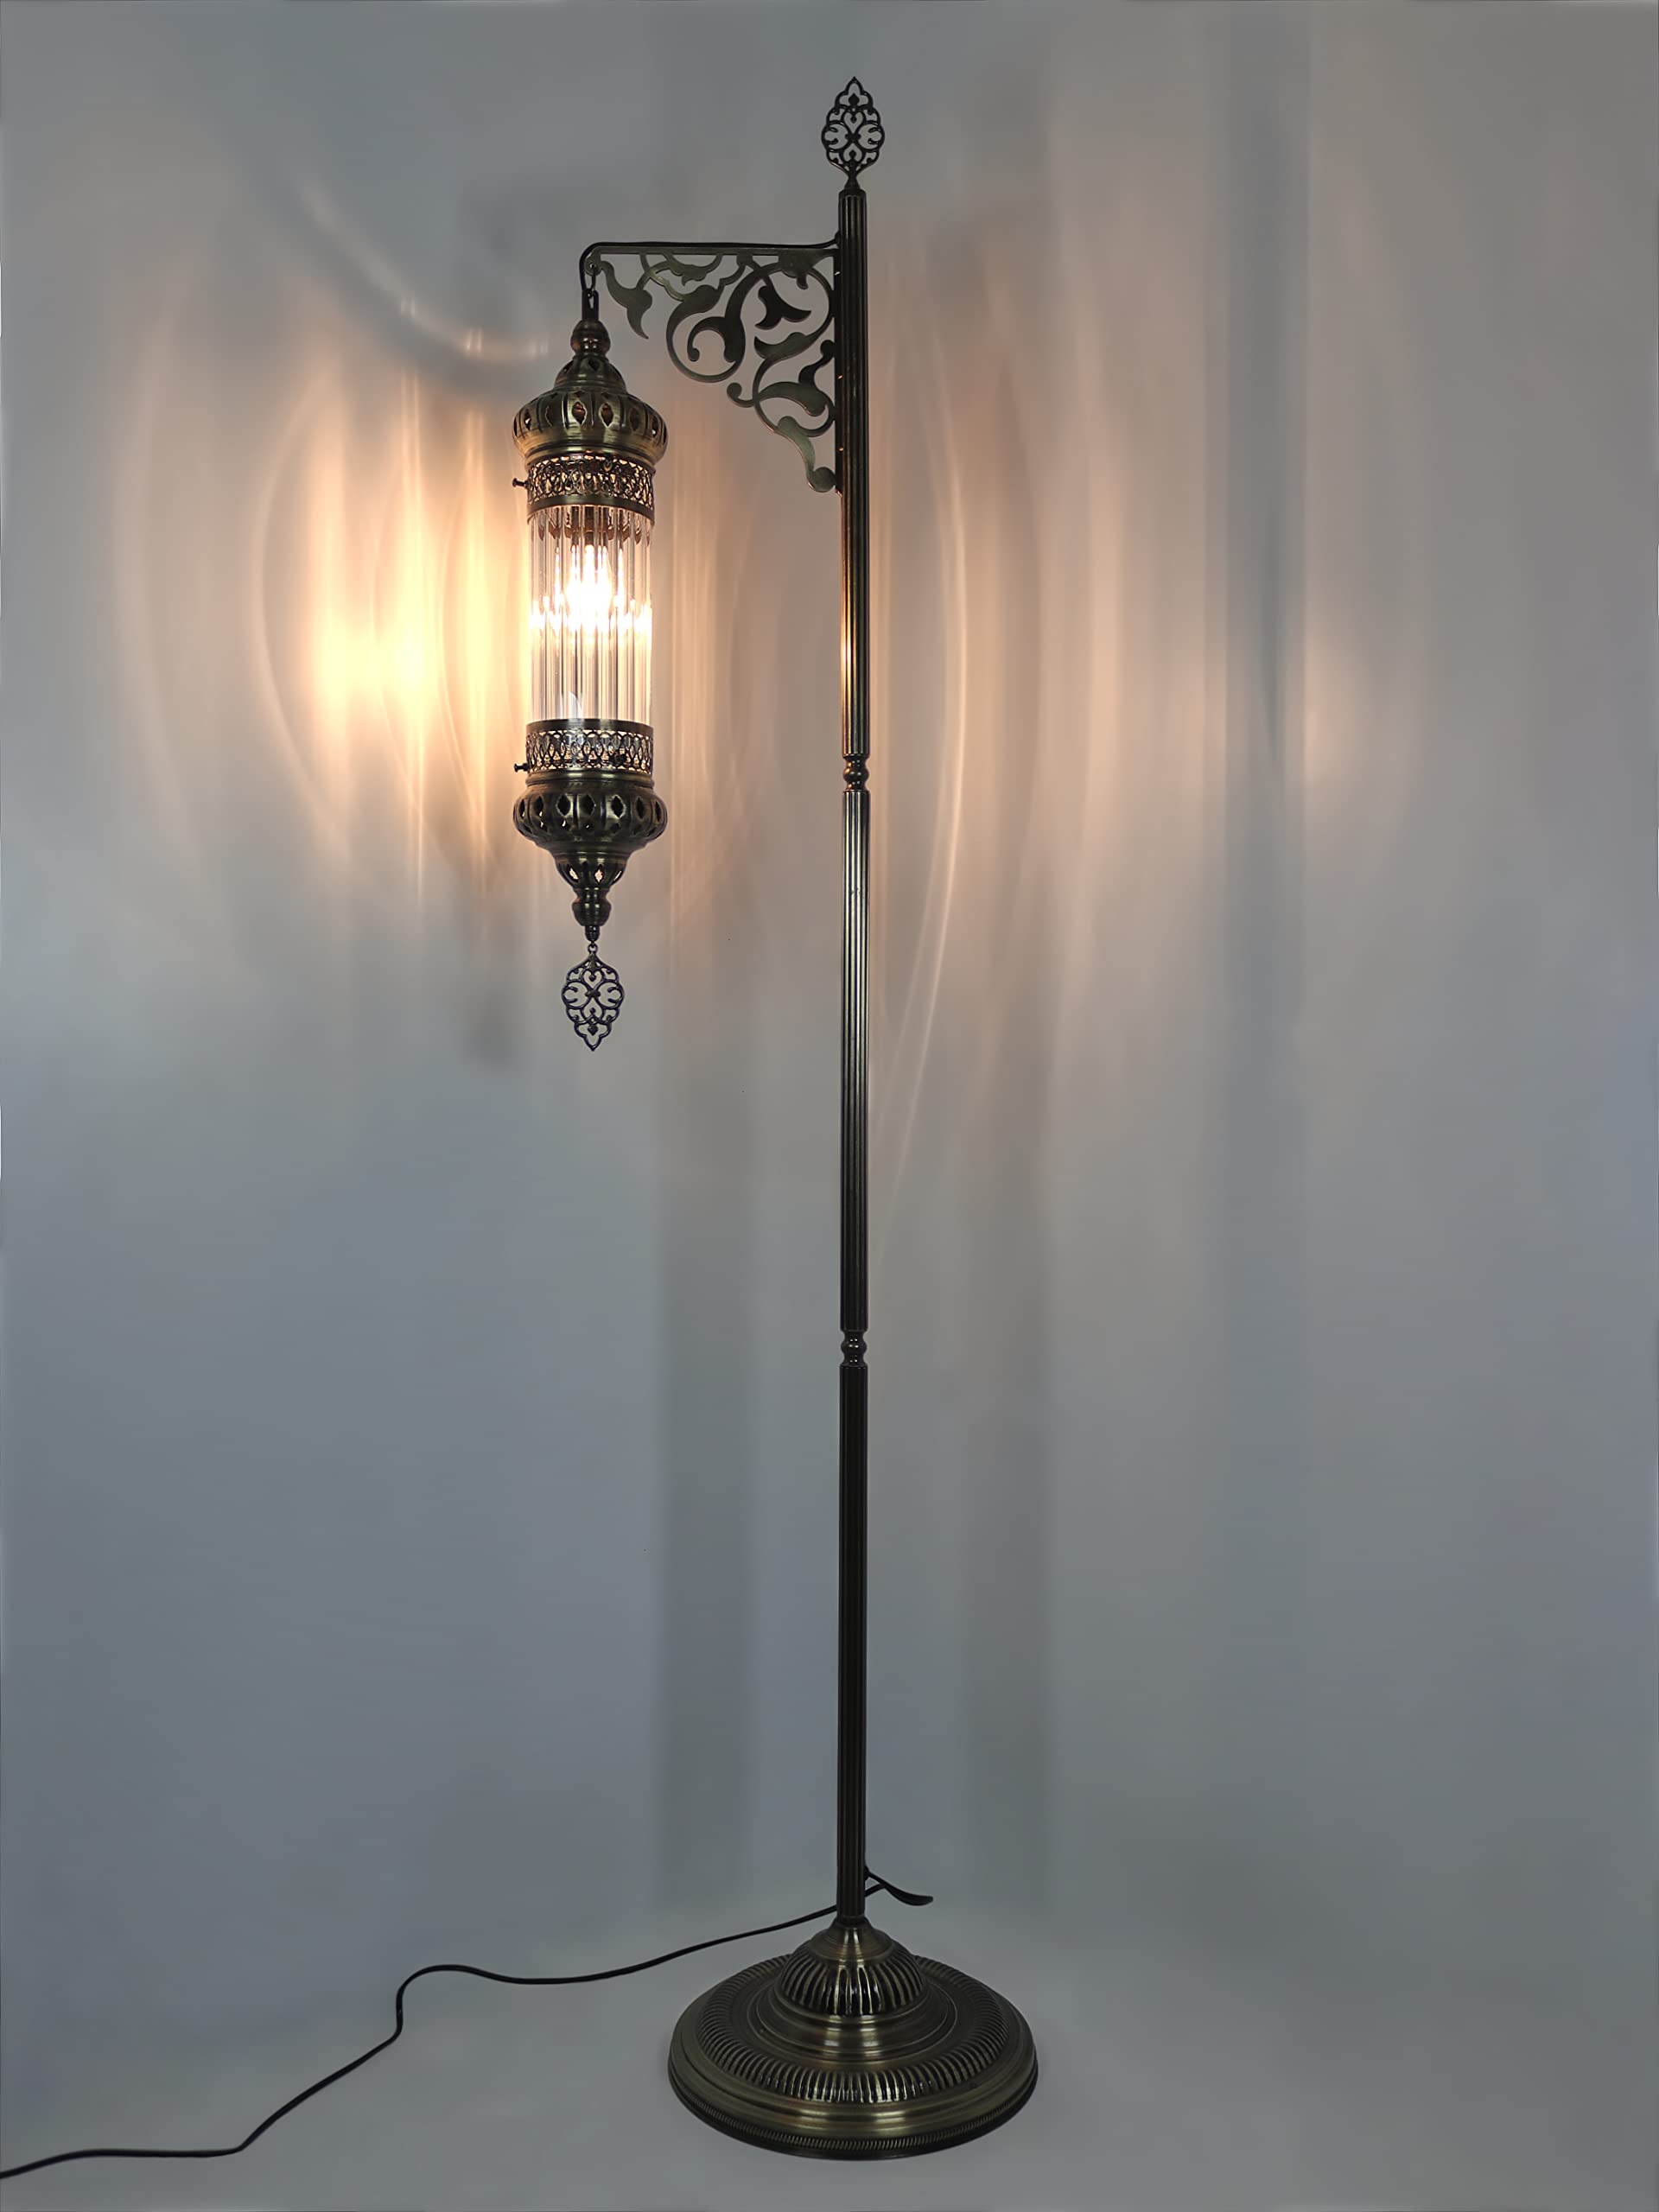 DEMMEX Turkish Moroccan Ottoman Era Style Antique Vintage Standing Floor Lamp, Antique Brass Metal Body, Shatterproof Pyrex Glass, 5.5 ft -165cm